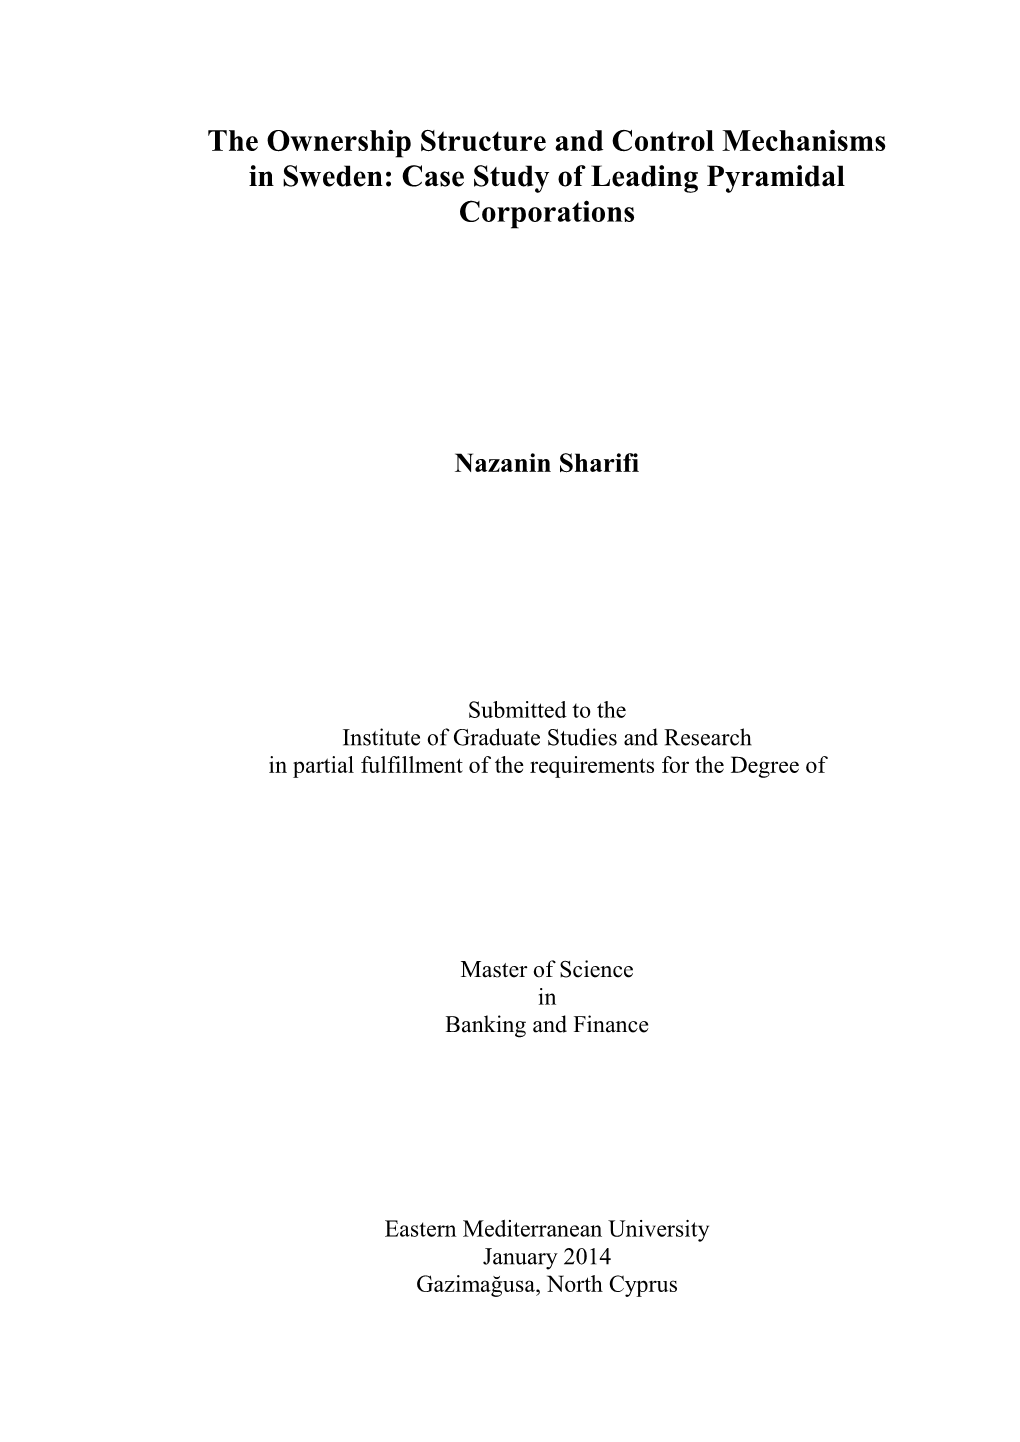 Case Studies of Leading Pyramidal Corporations